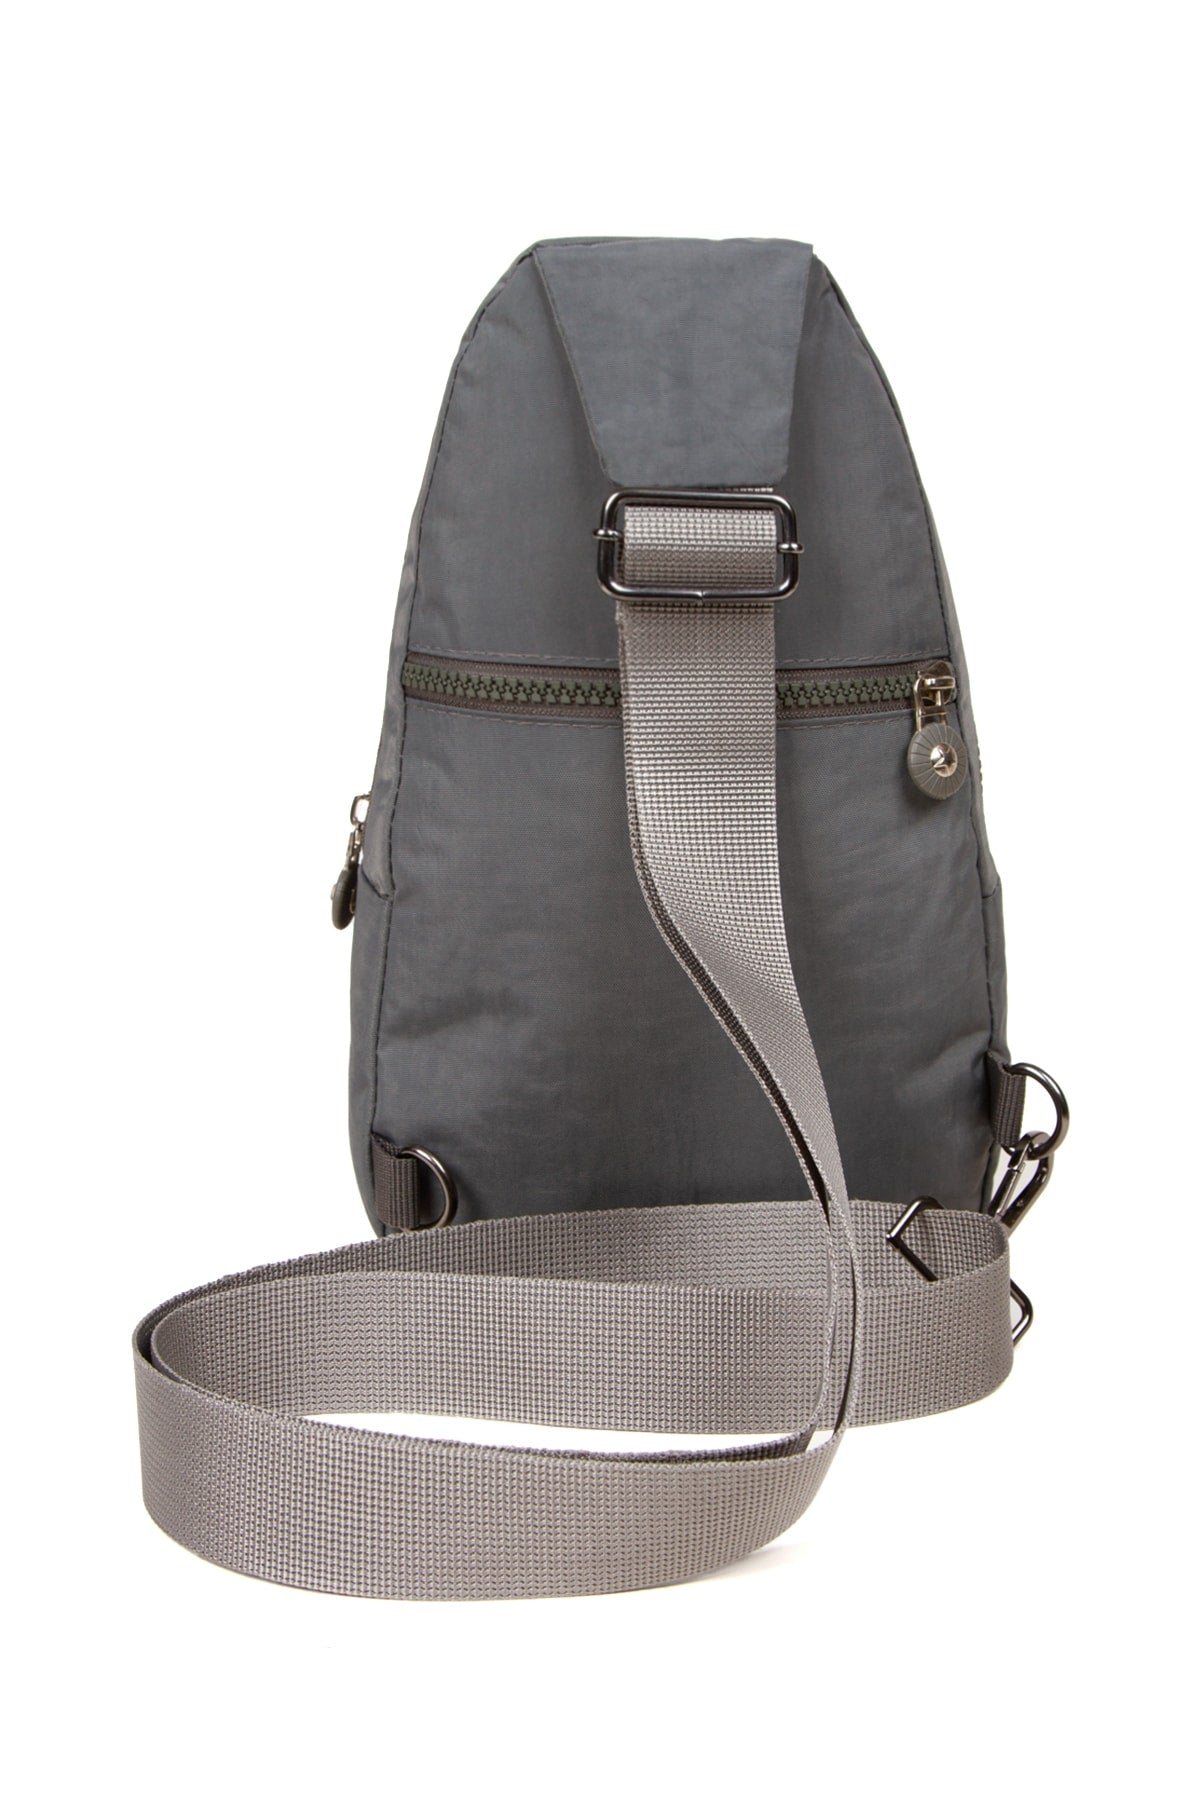 Unisex Crinkle Waterproof Bag, Crossbody Shoulder And Chest Bag, Bodybag, Gray Color